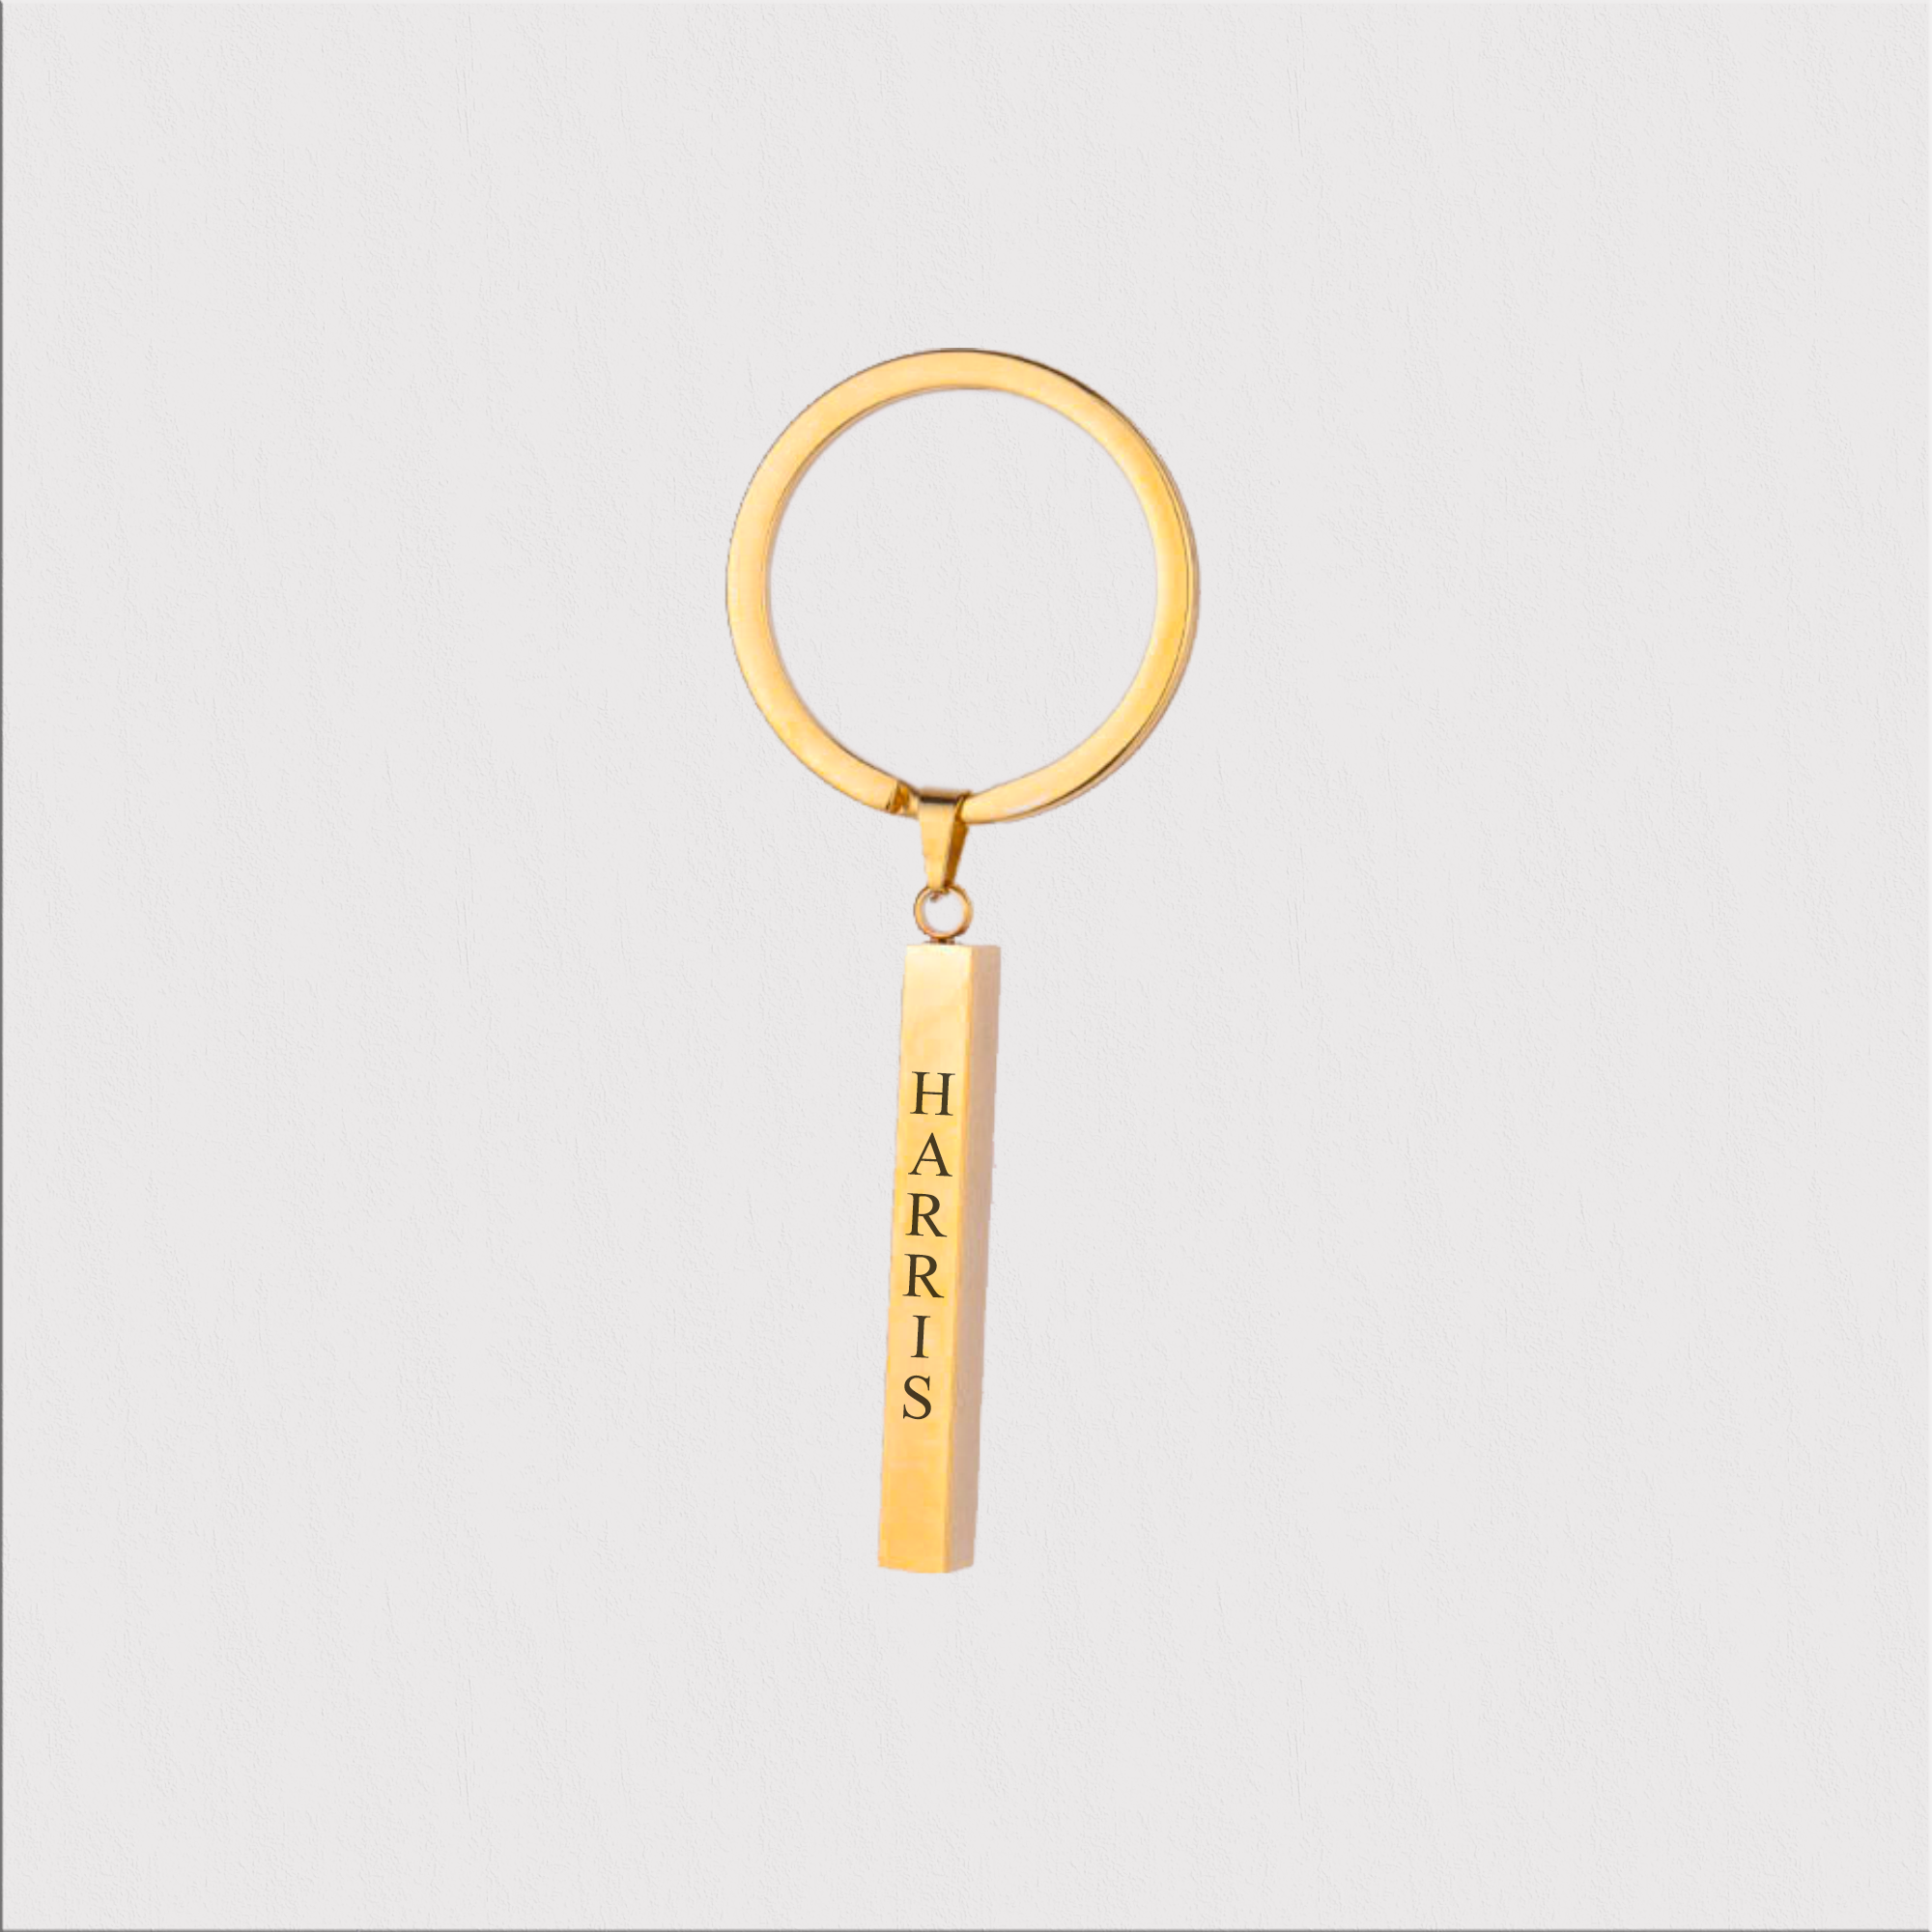 Custom Engraved 3D Bar drive safe keychain